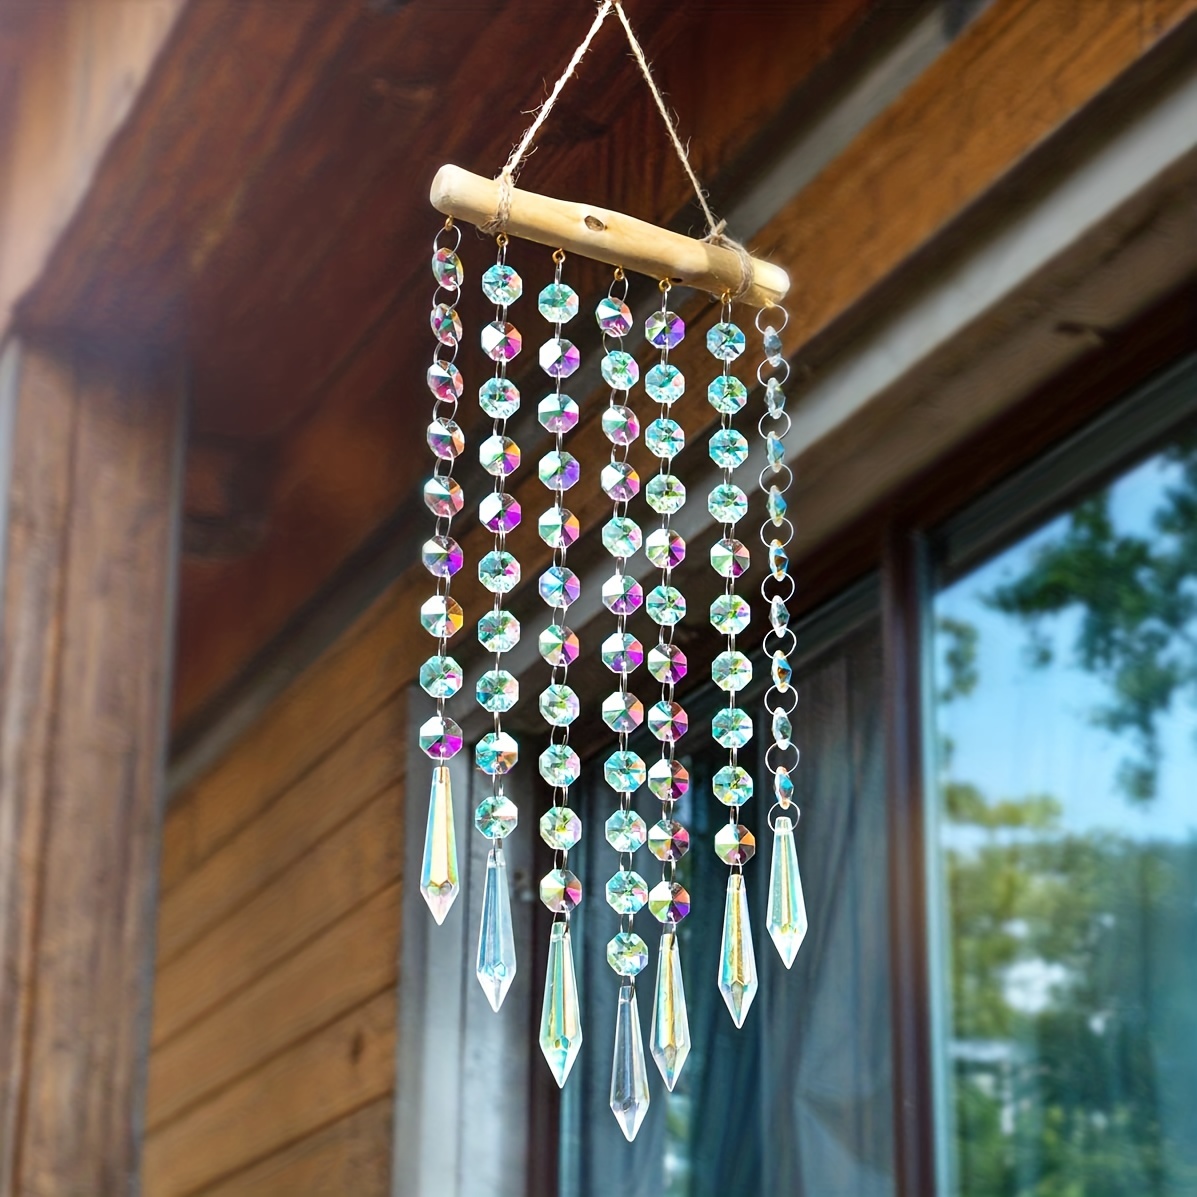  Hanging Crystal Prism Suncatcher Window Garden Decoration  Ornament Rainbow Glass Beads Chain Pendant Crystal Wind Chimes : Patio,  Lawn & Garden